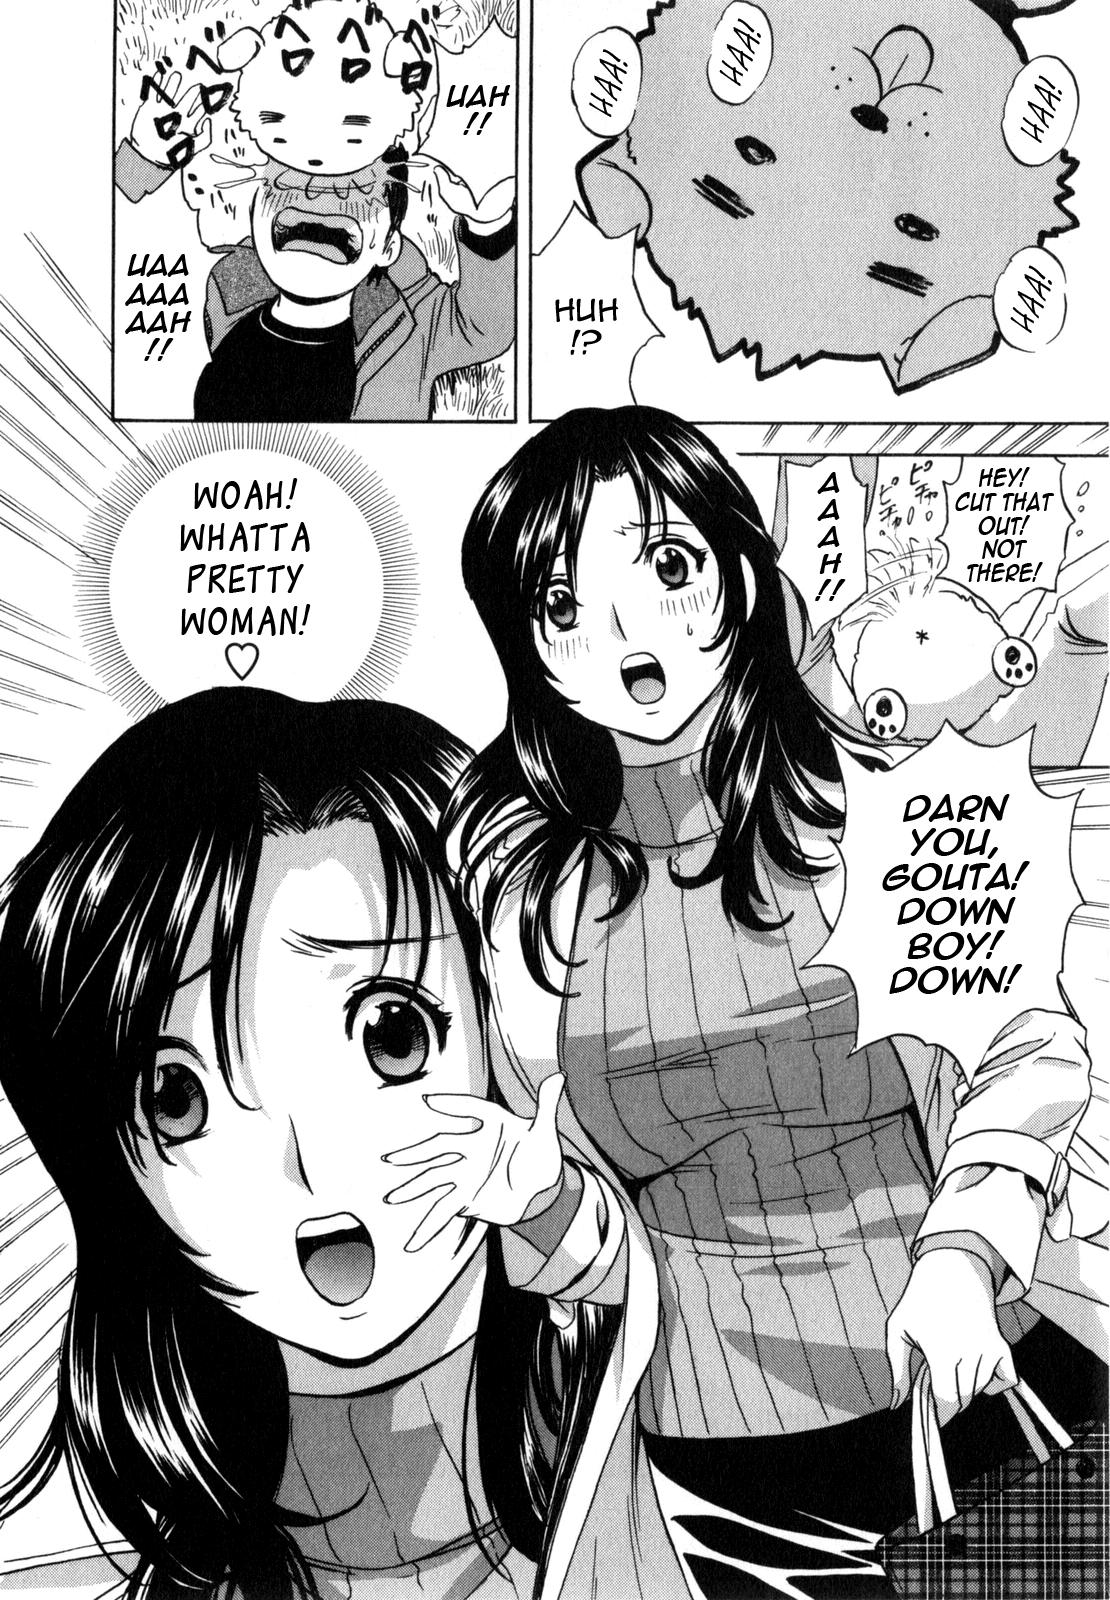 [Hidemaru] Life with Married Women Just Like a Manga 1 - Ch. 1-9 [English] {Tadanohito} 10